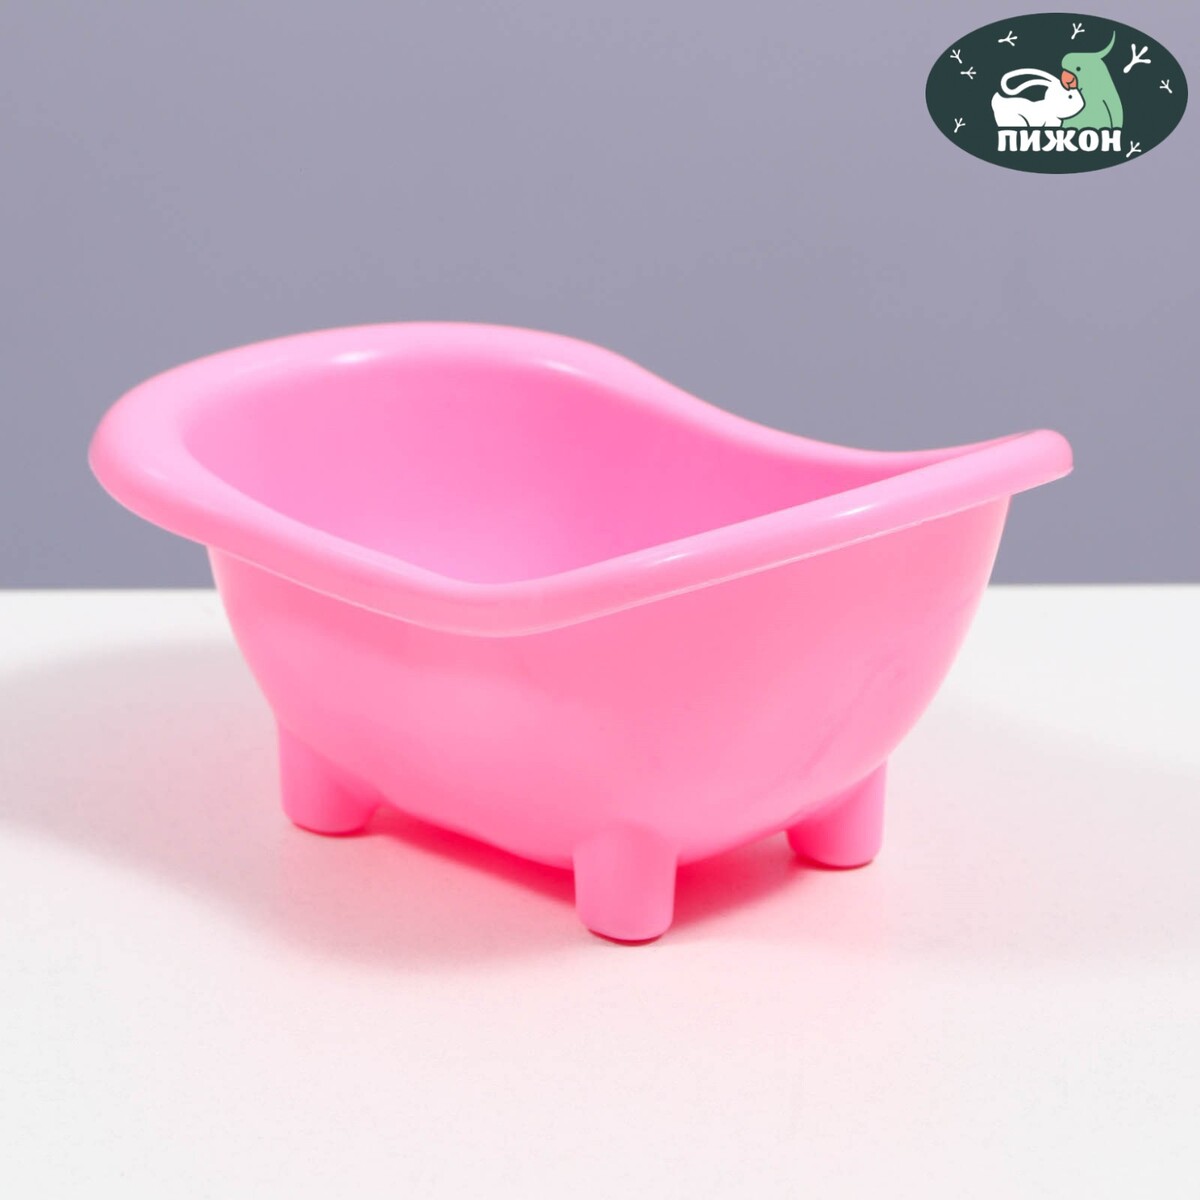 Ванночка для хомяков, 15,5 х 8,5 см, розовая беговая тарелка carno для грызунов 18 х 18 х 11 см розовая